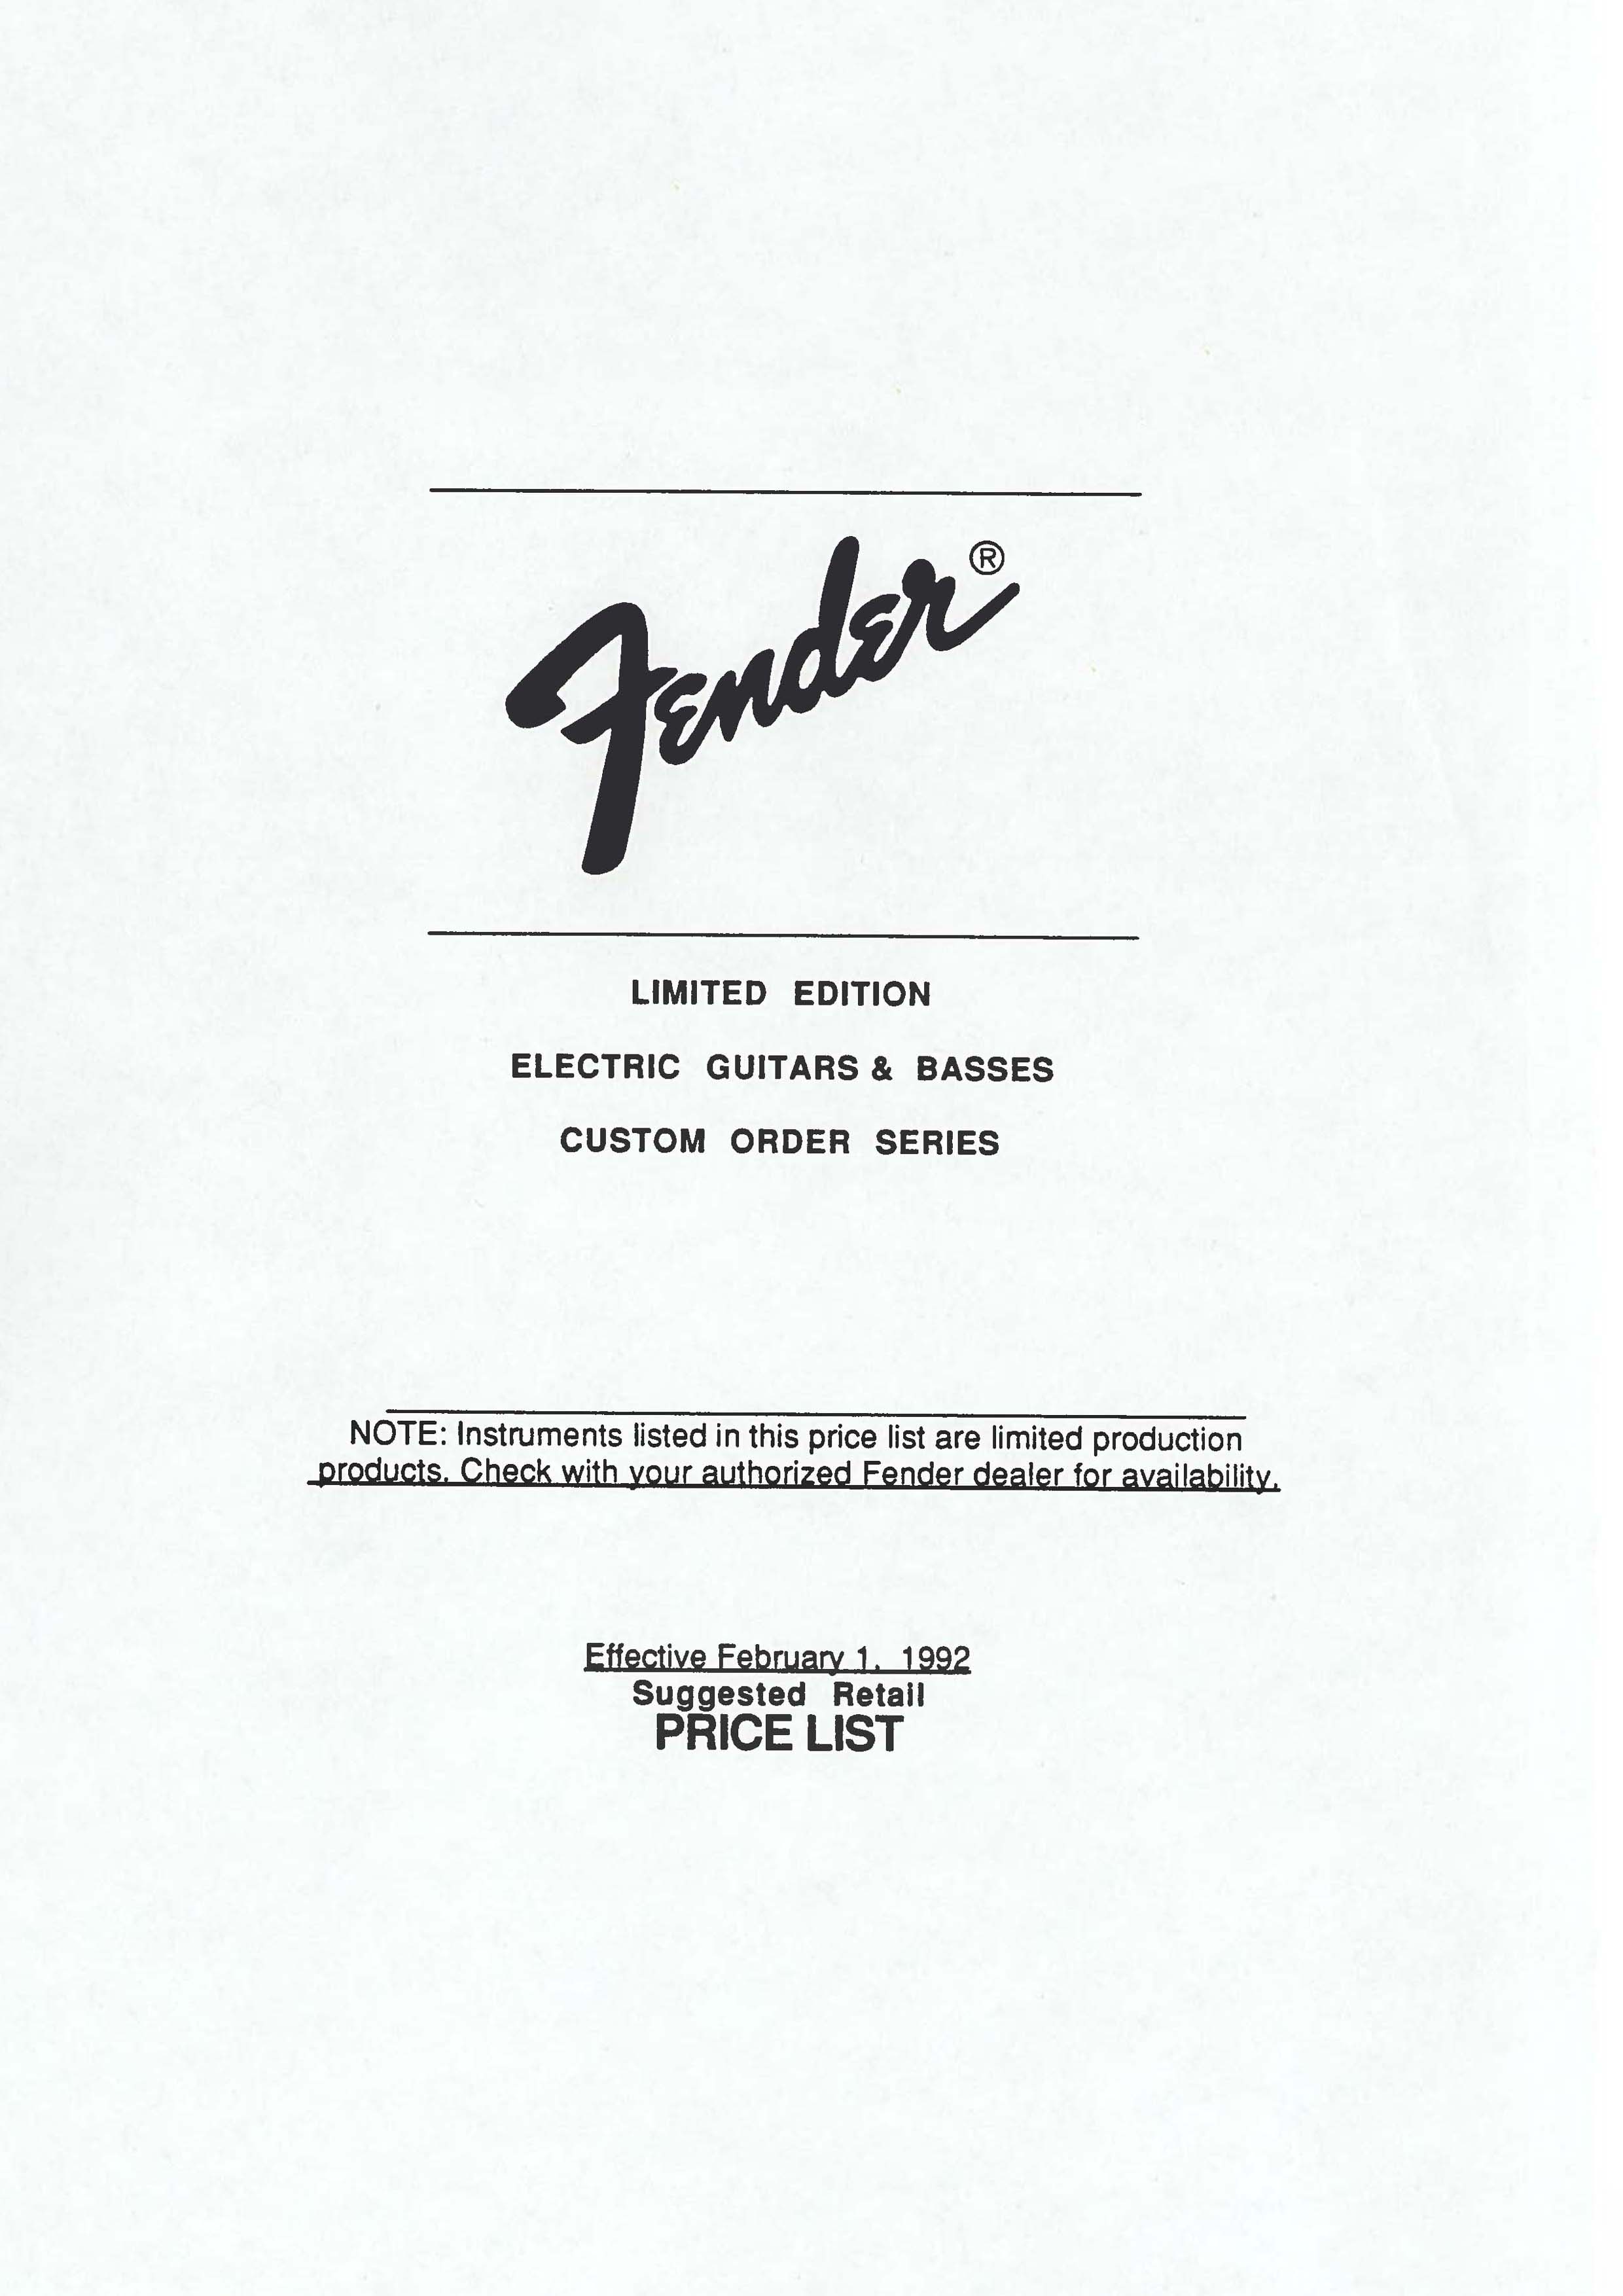 Fender Price list 1992